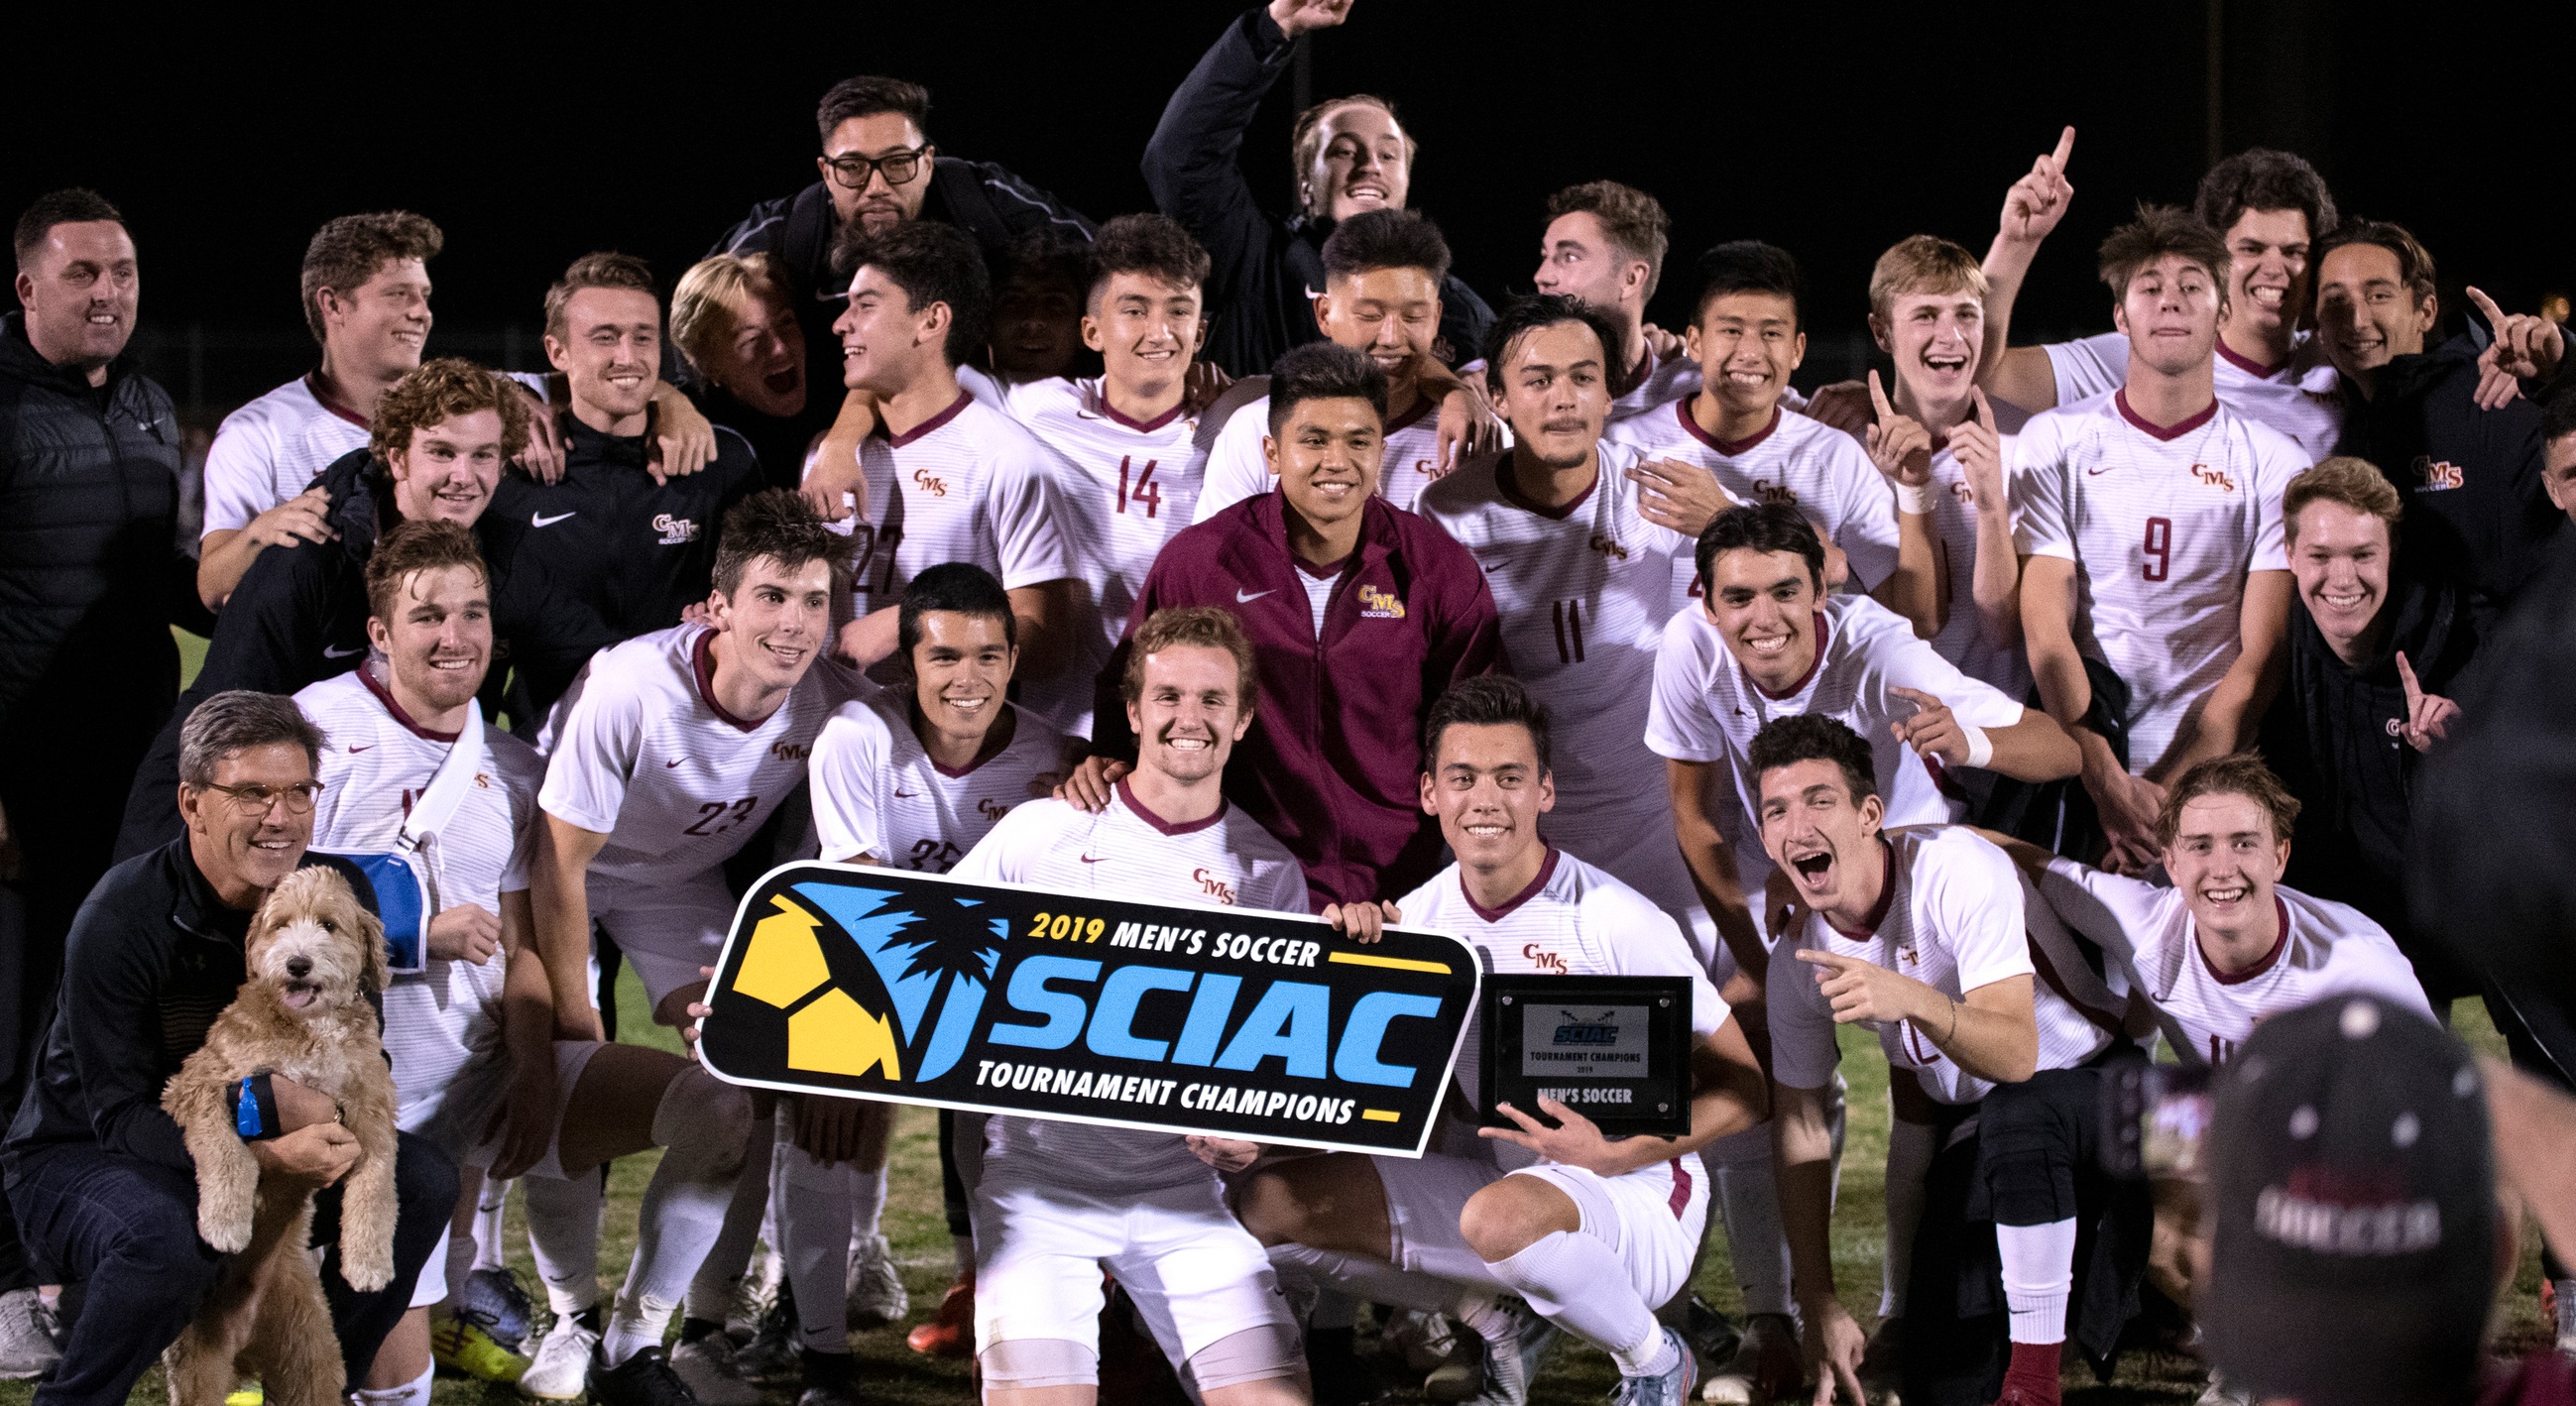 CMS men's soccer celebrating the 2019 SCIAC Tournament title